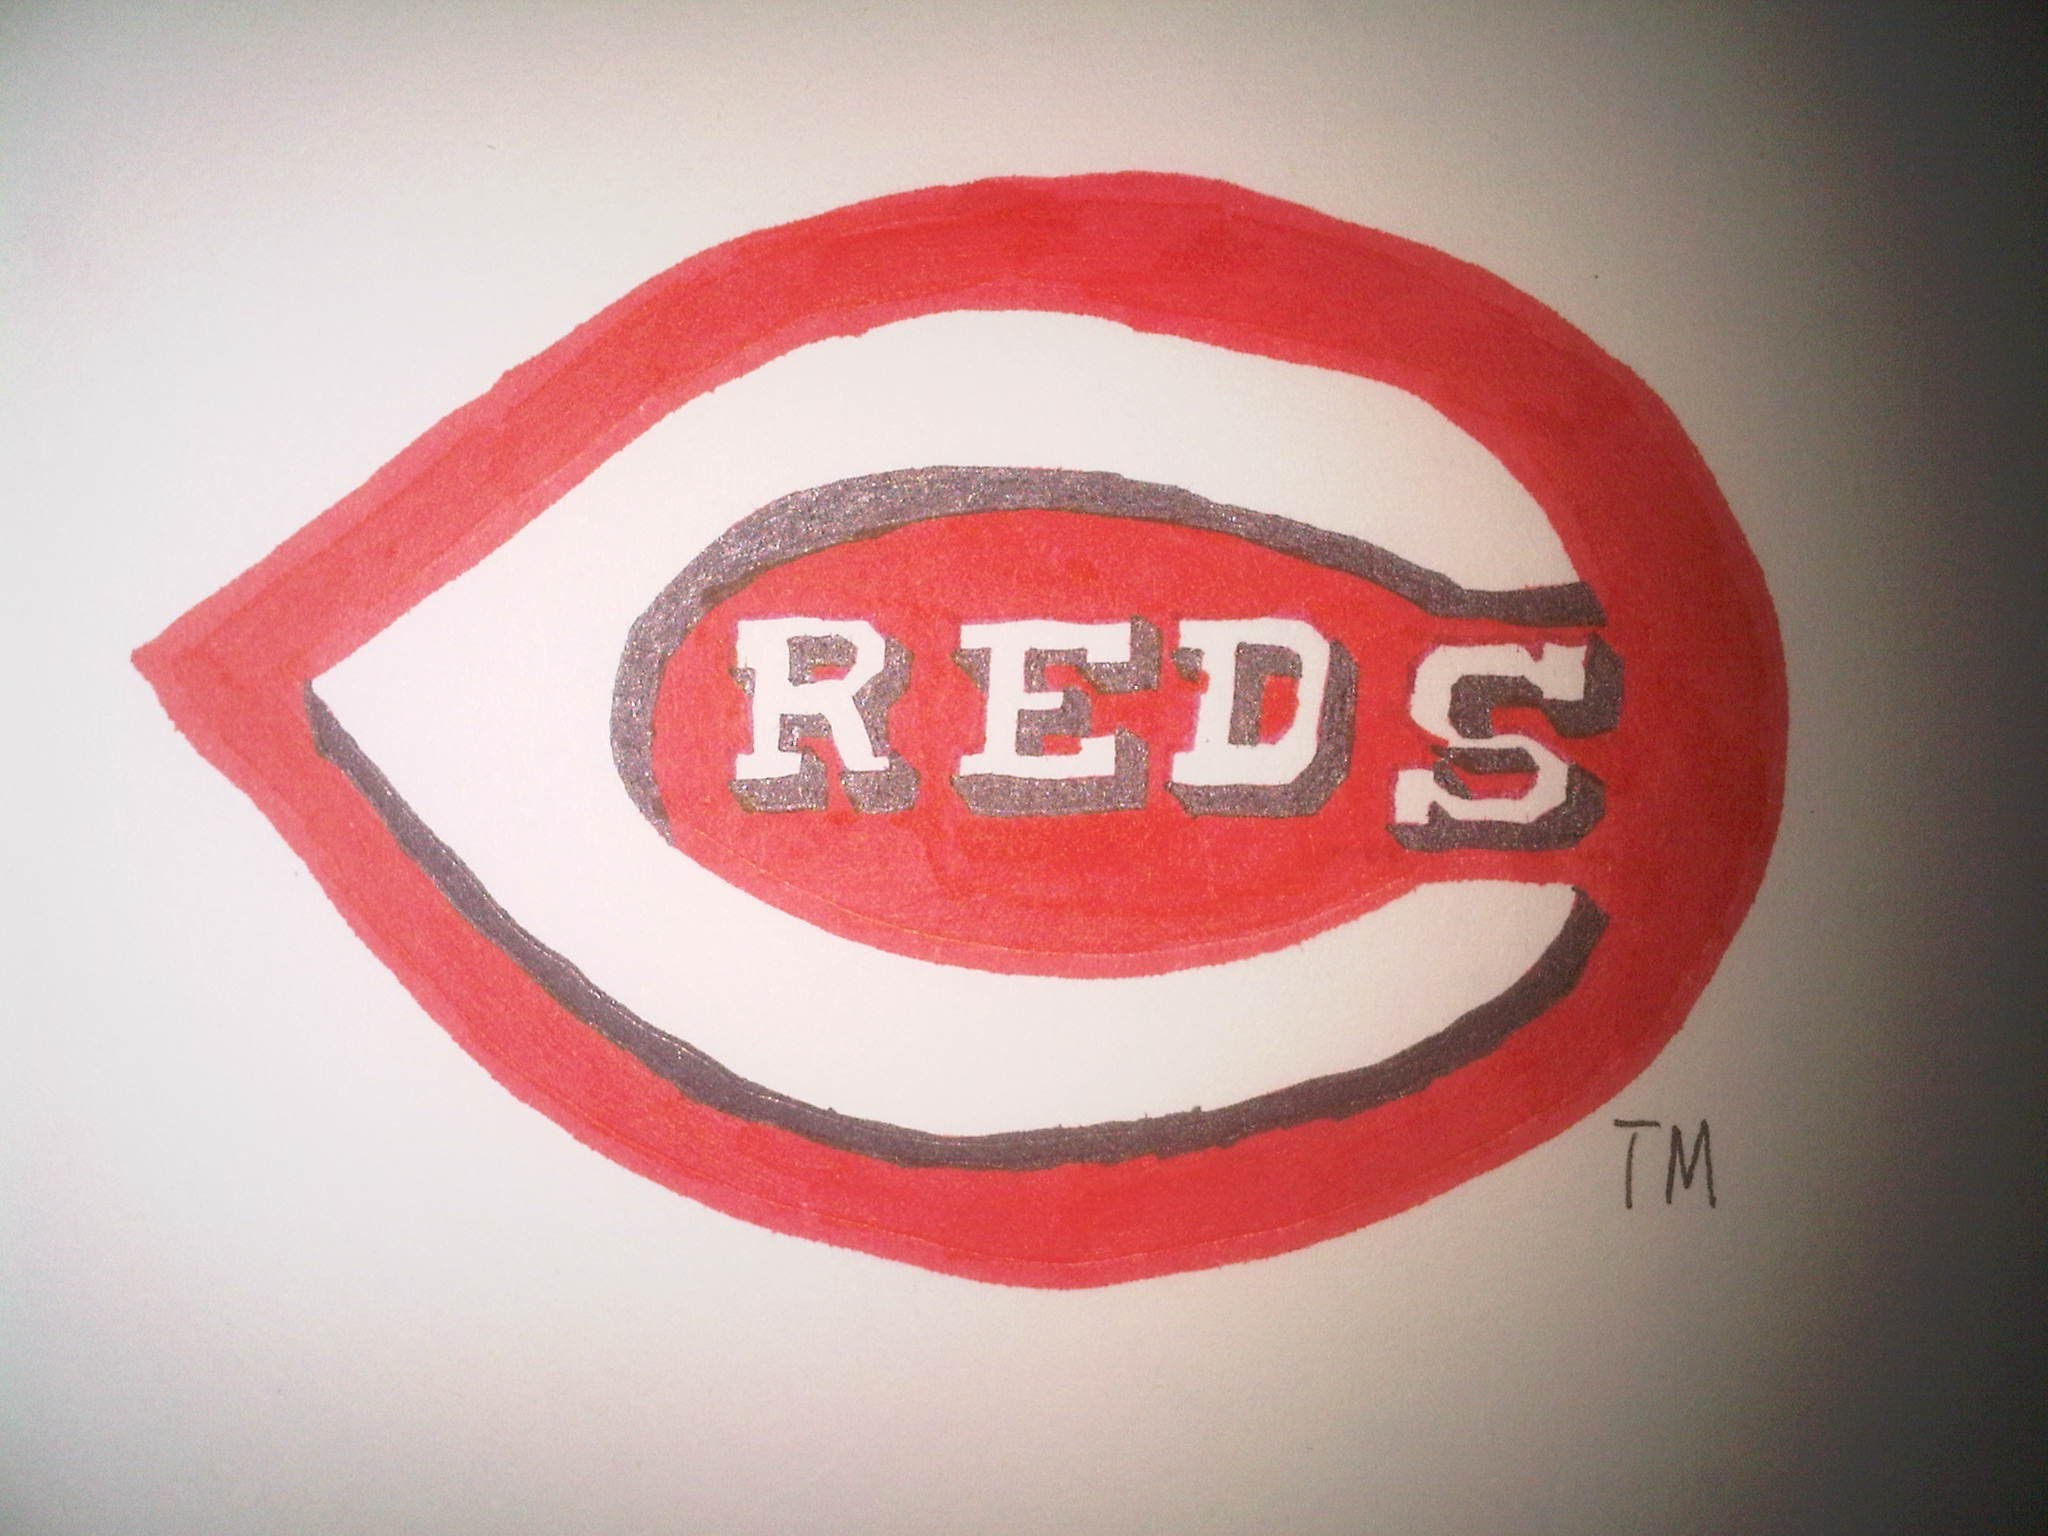 2048x1536 How To Draw The Cincinnati Reds Logos YouTube